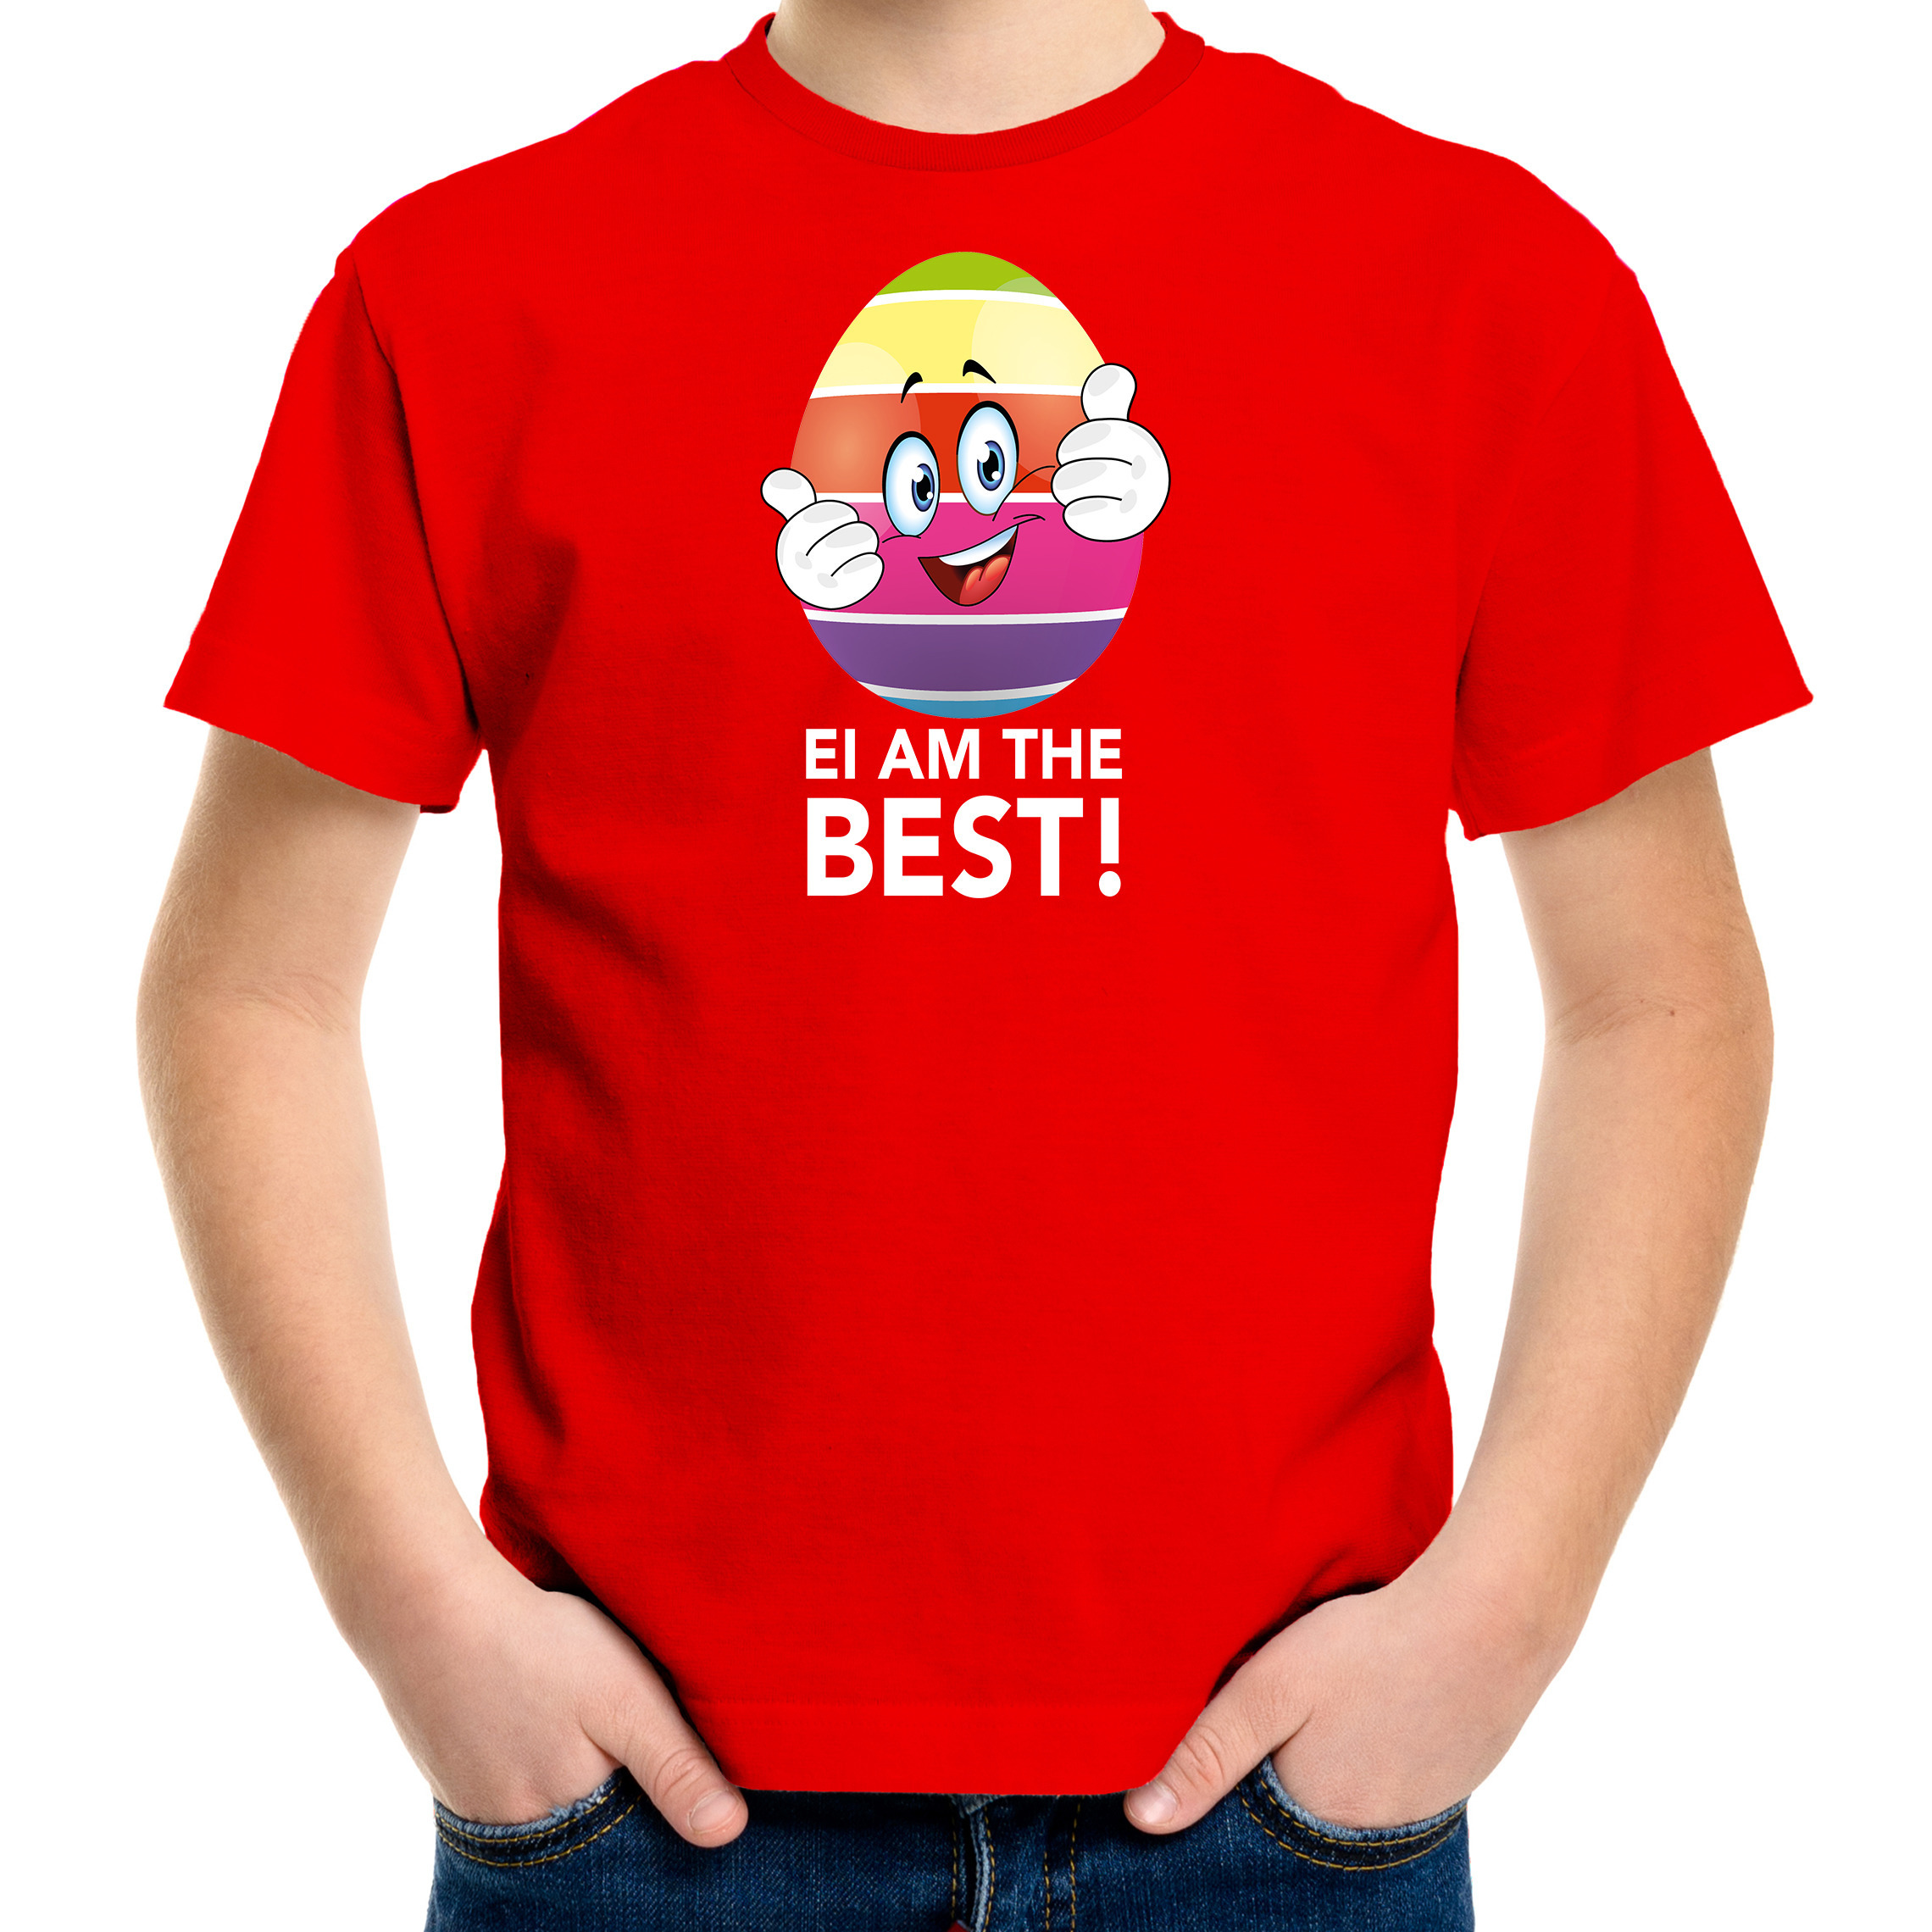 Vrolijk Paasei ei am the best t-shirt rood voor kinderen - Paas kleding - outfit